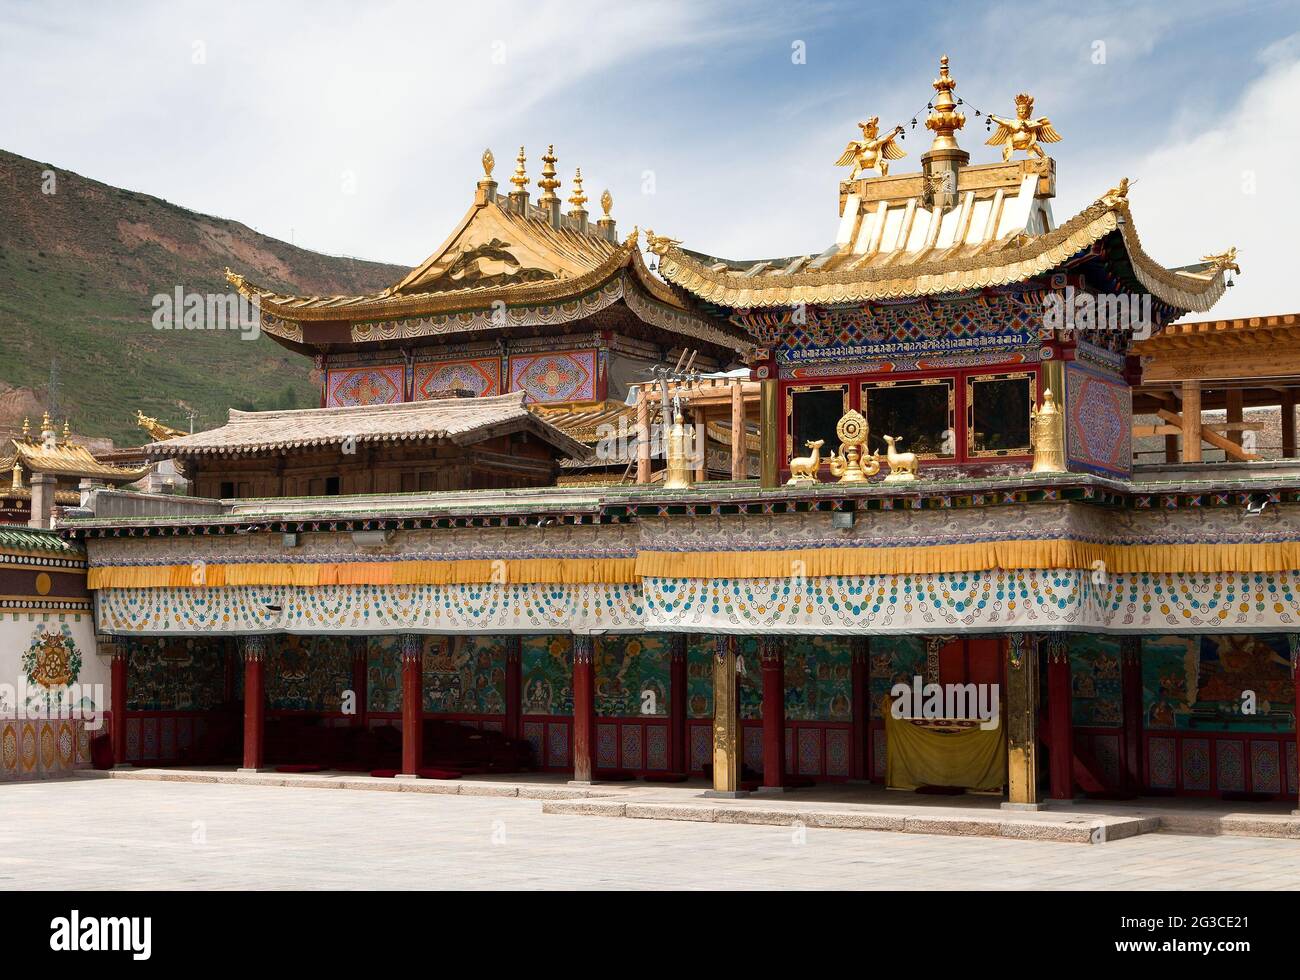 TONGREN KLOSTER, CHINA, 23. Juli 2013 - Detail aus Tongren Kloster oder Longwu Kloster - Huangnan, Rebkong, Guizhou, Provinz Qinghai, China Stockfoto